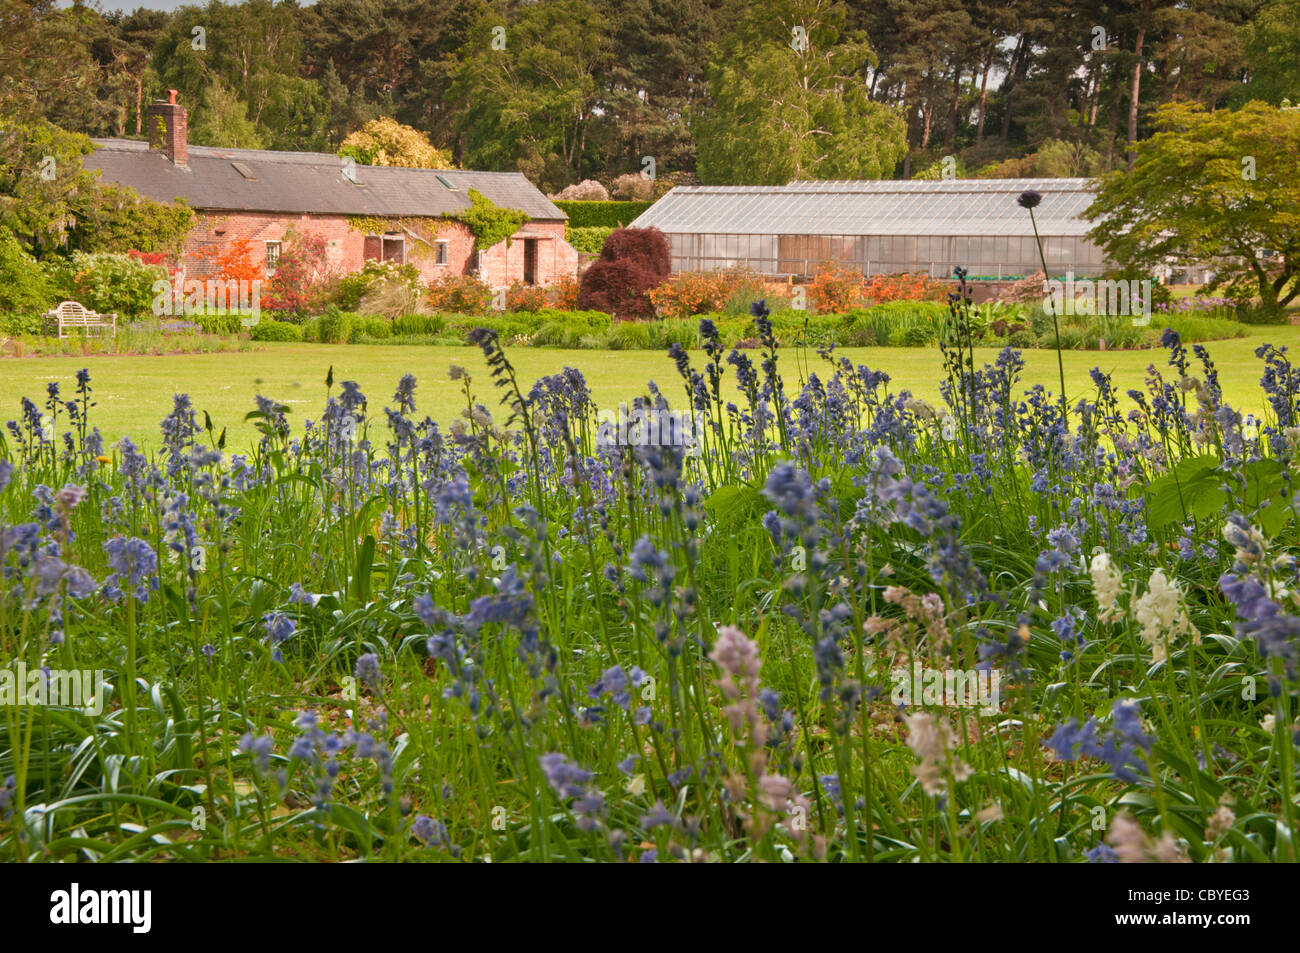 Le jardin des plantes herbacées, Ness Botanical Gardens, Ness, le Wirral, Merseyside, England, UK Banque D'Images